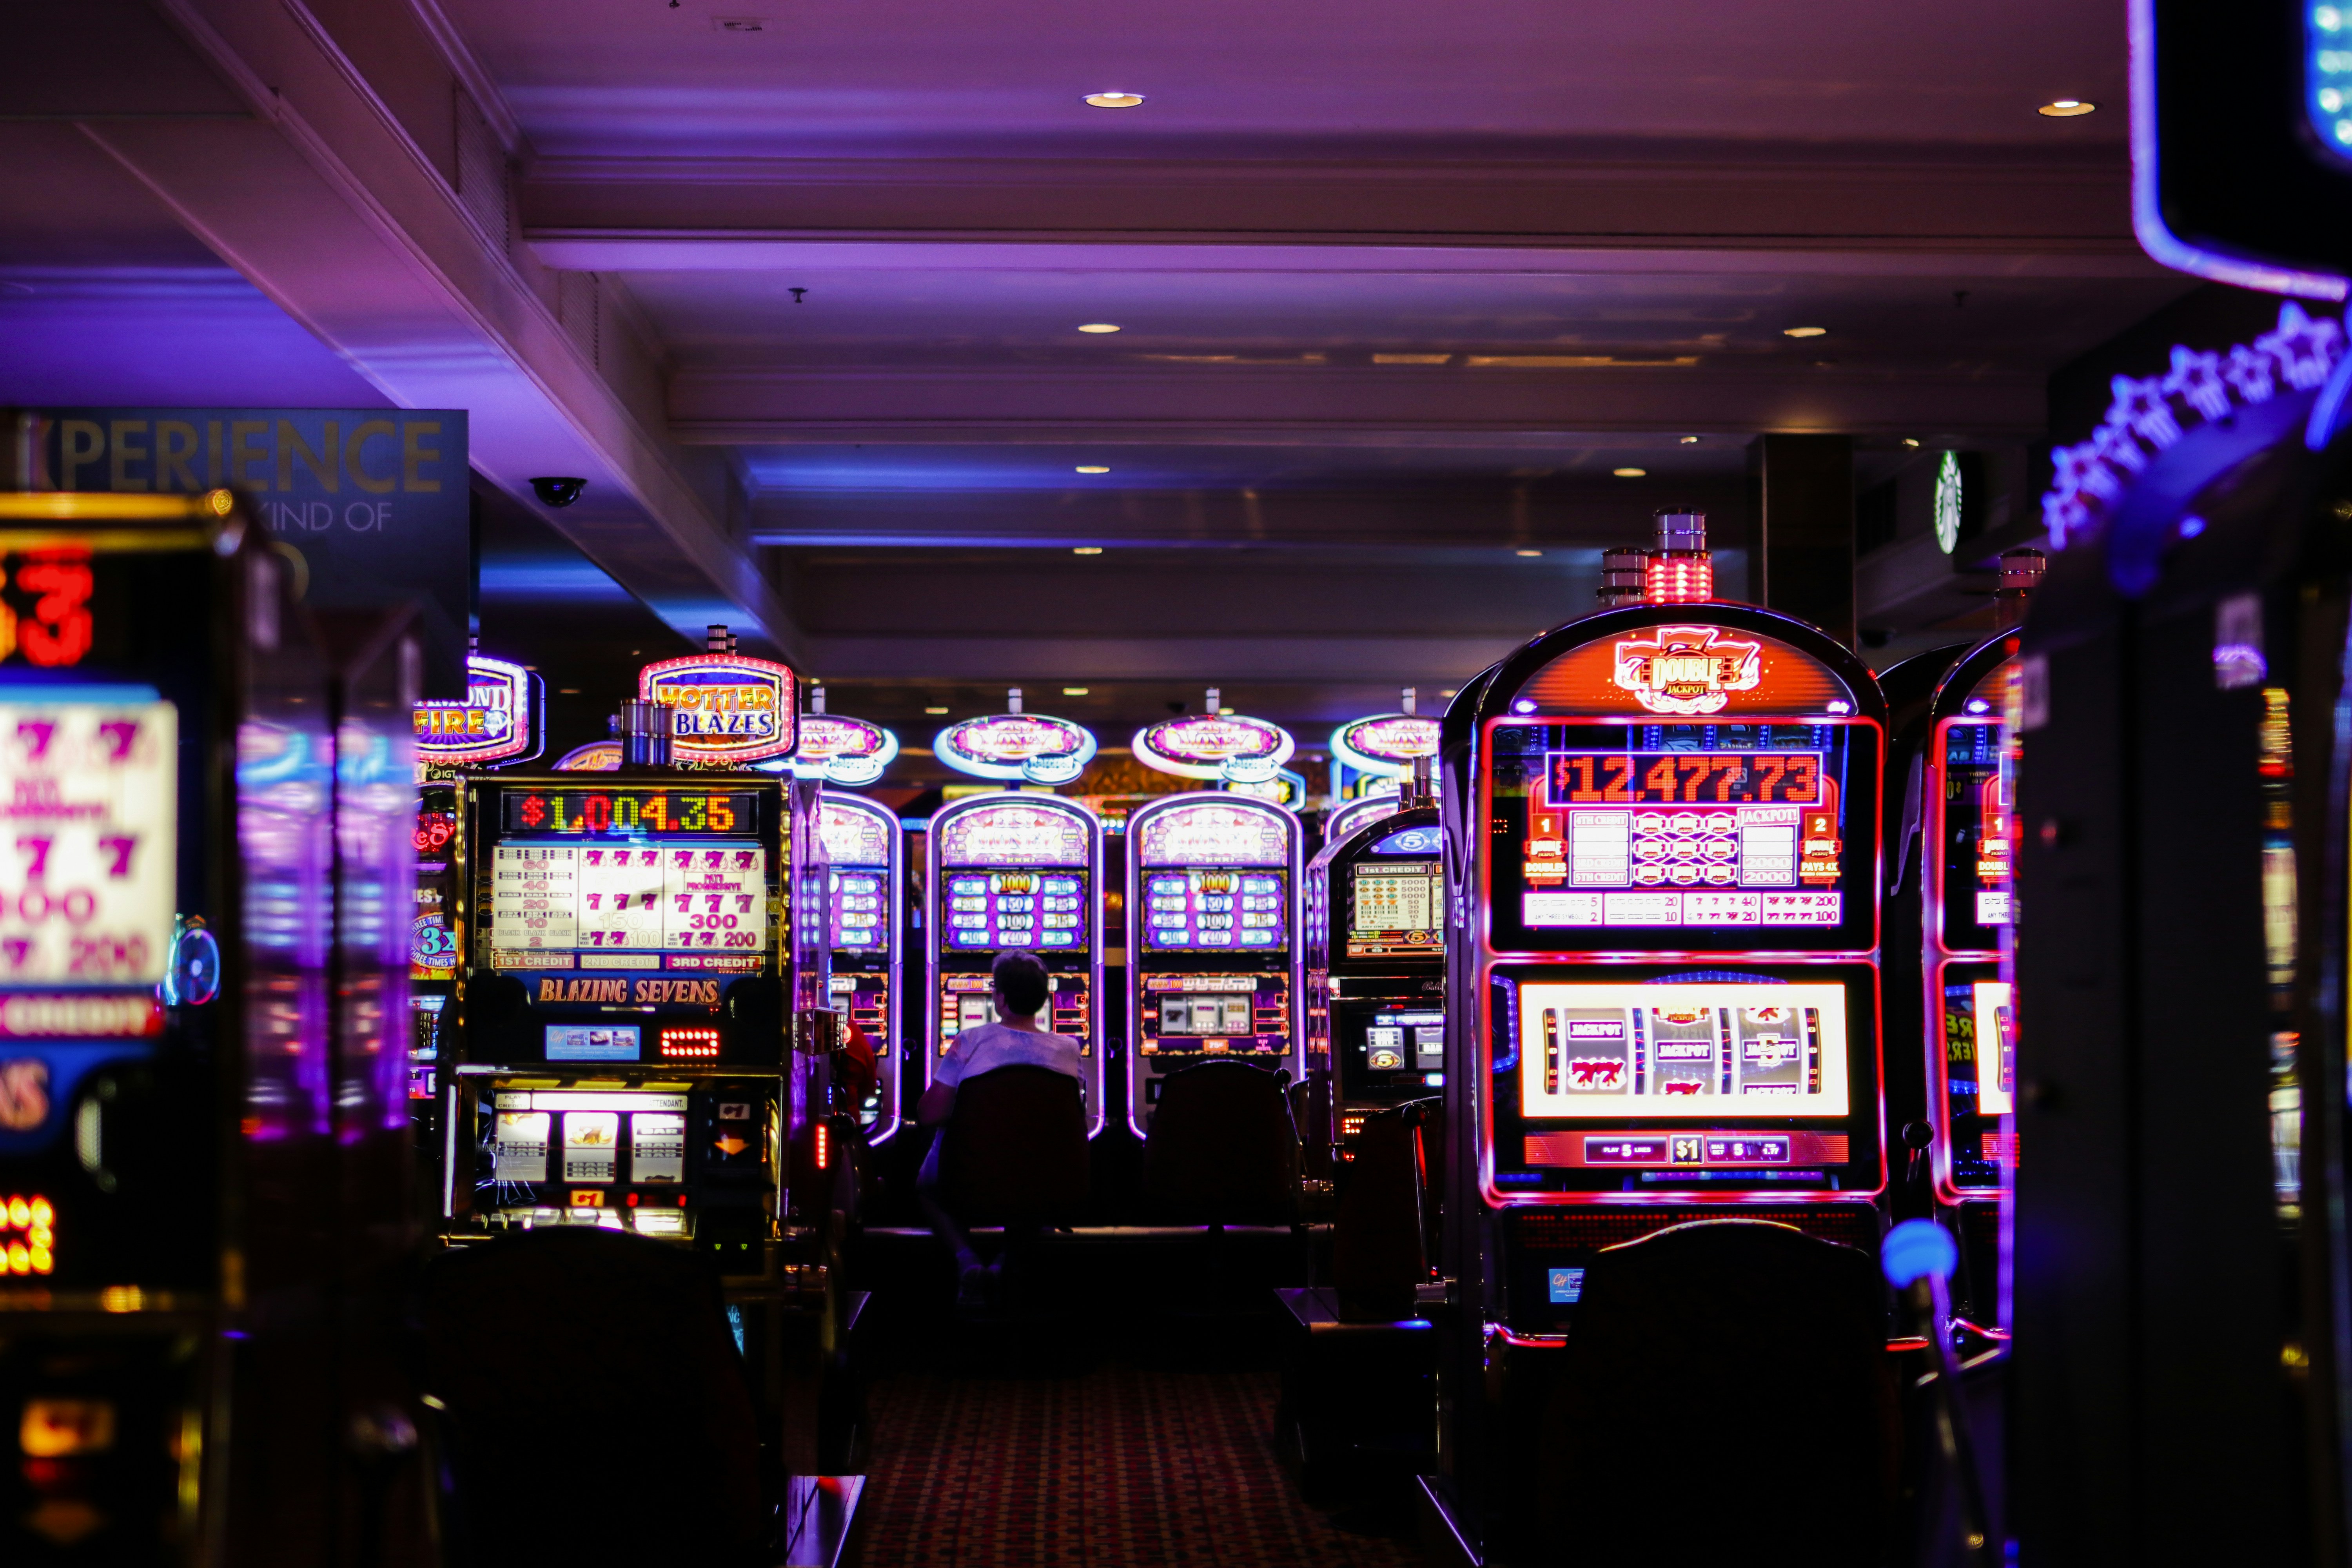 bedava deneme bonusu veren casino siteleri